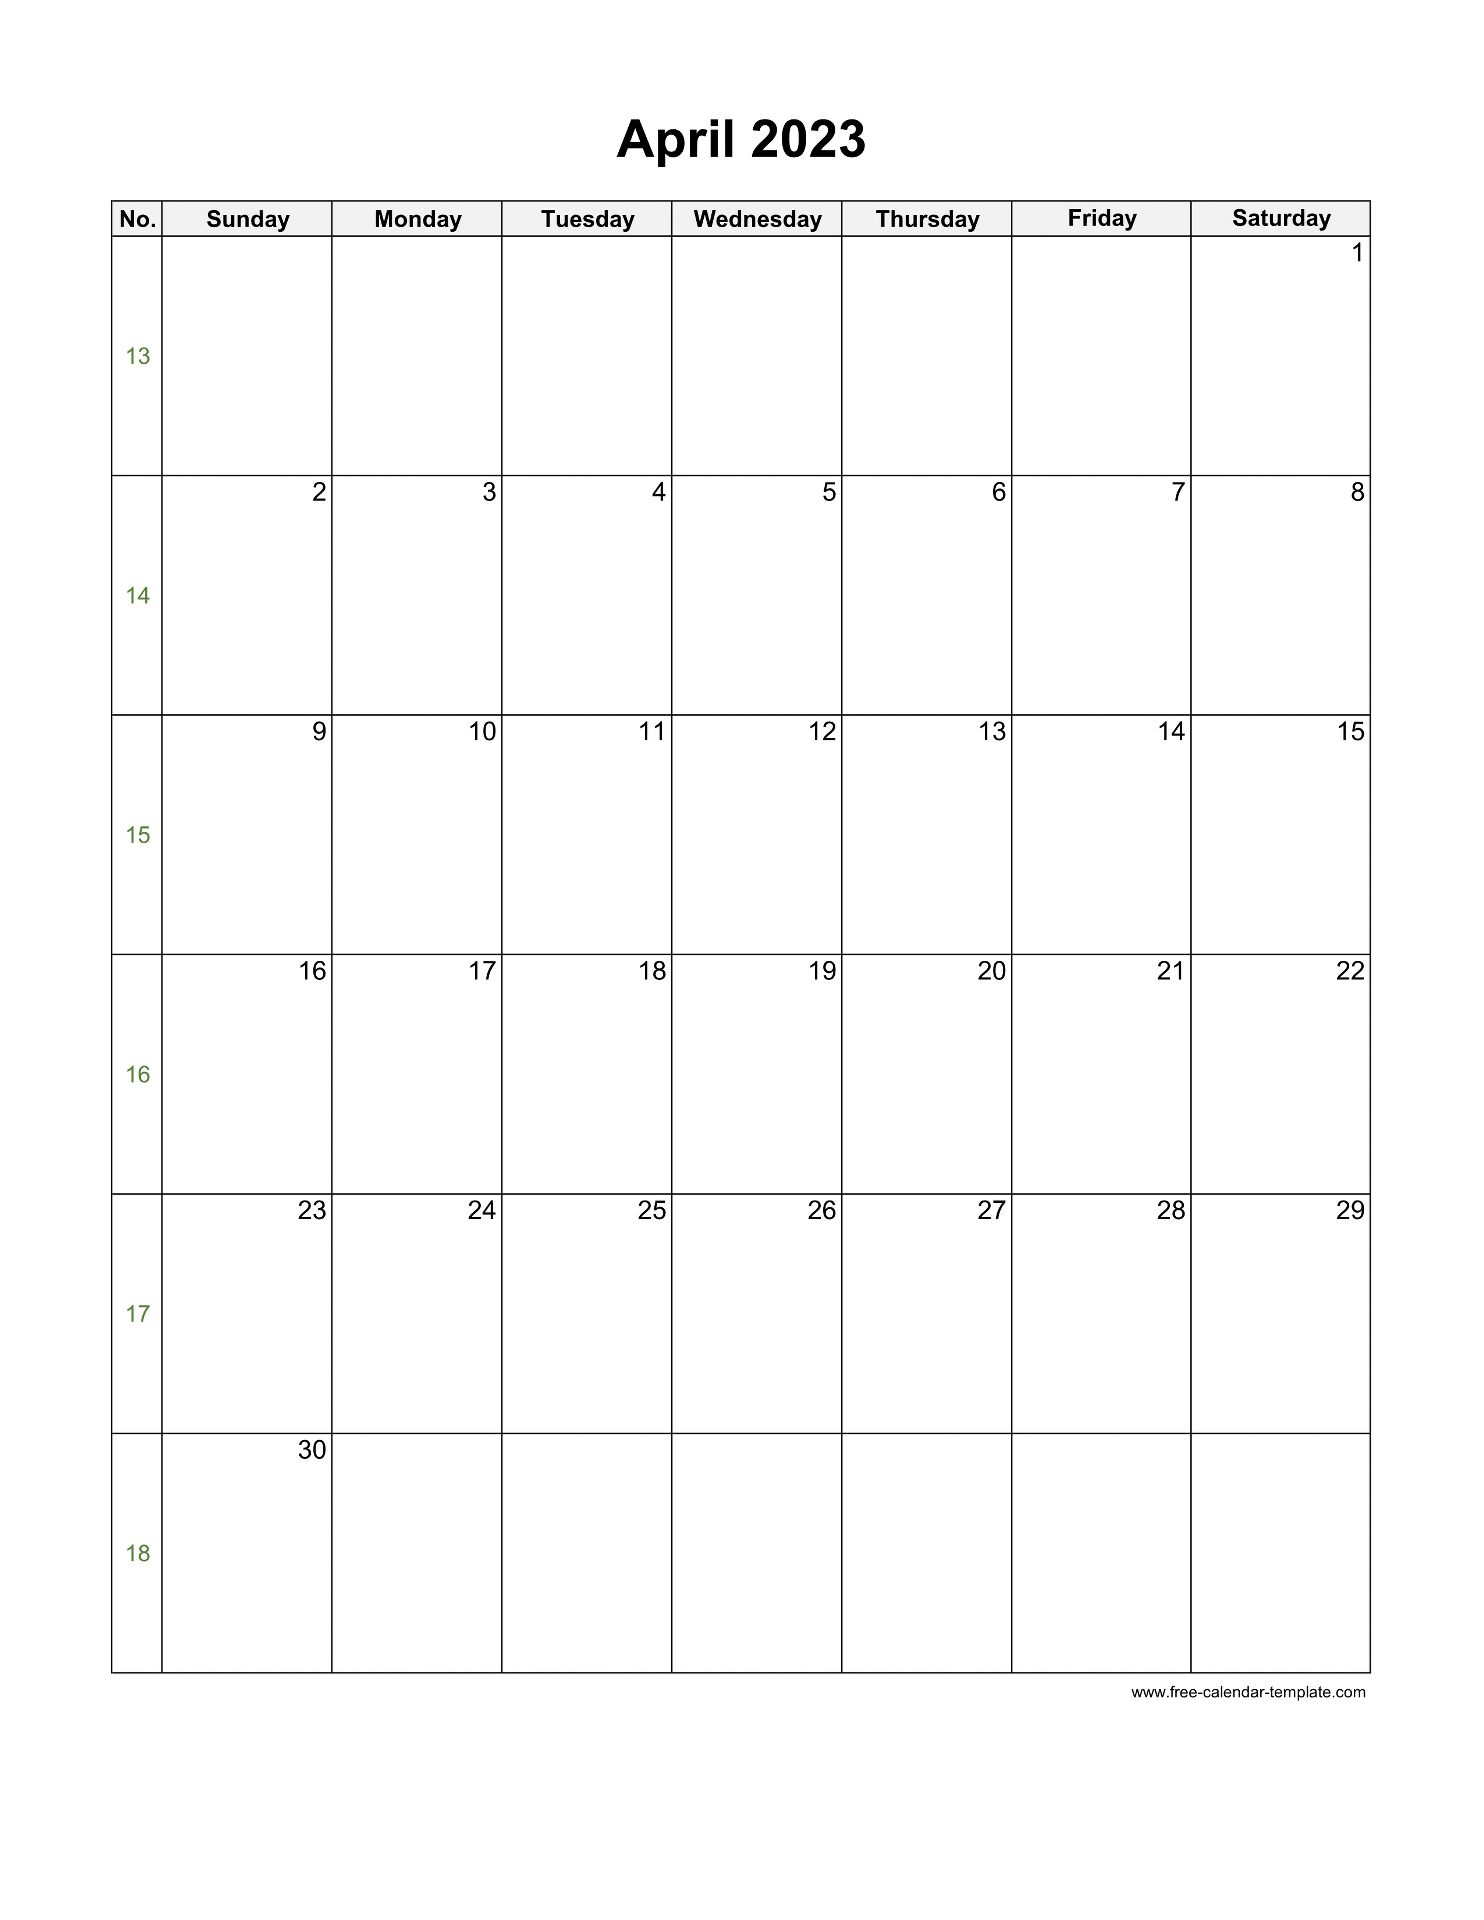 April 2023 Editable Calendar Printable Word Searches